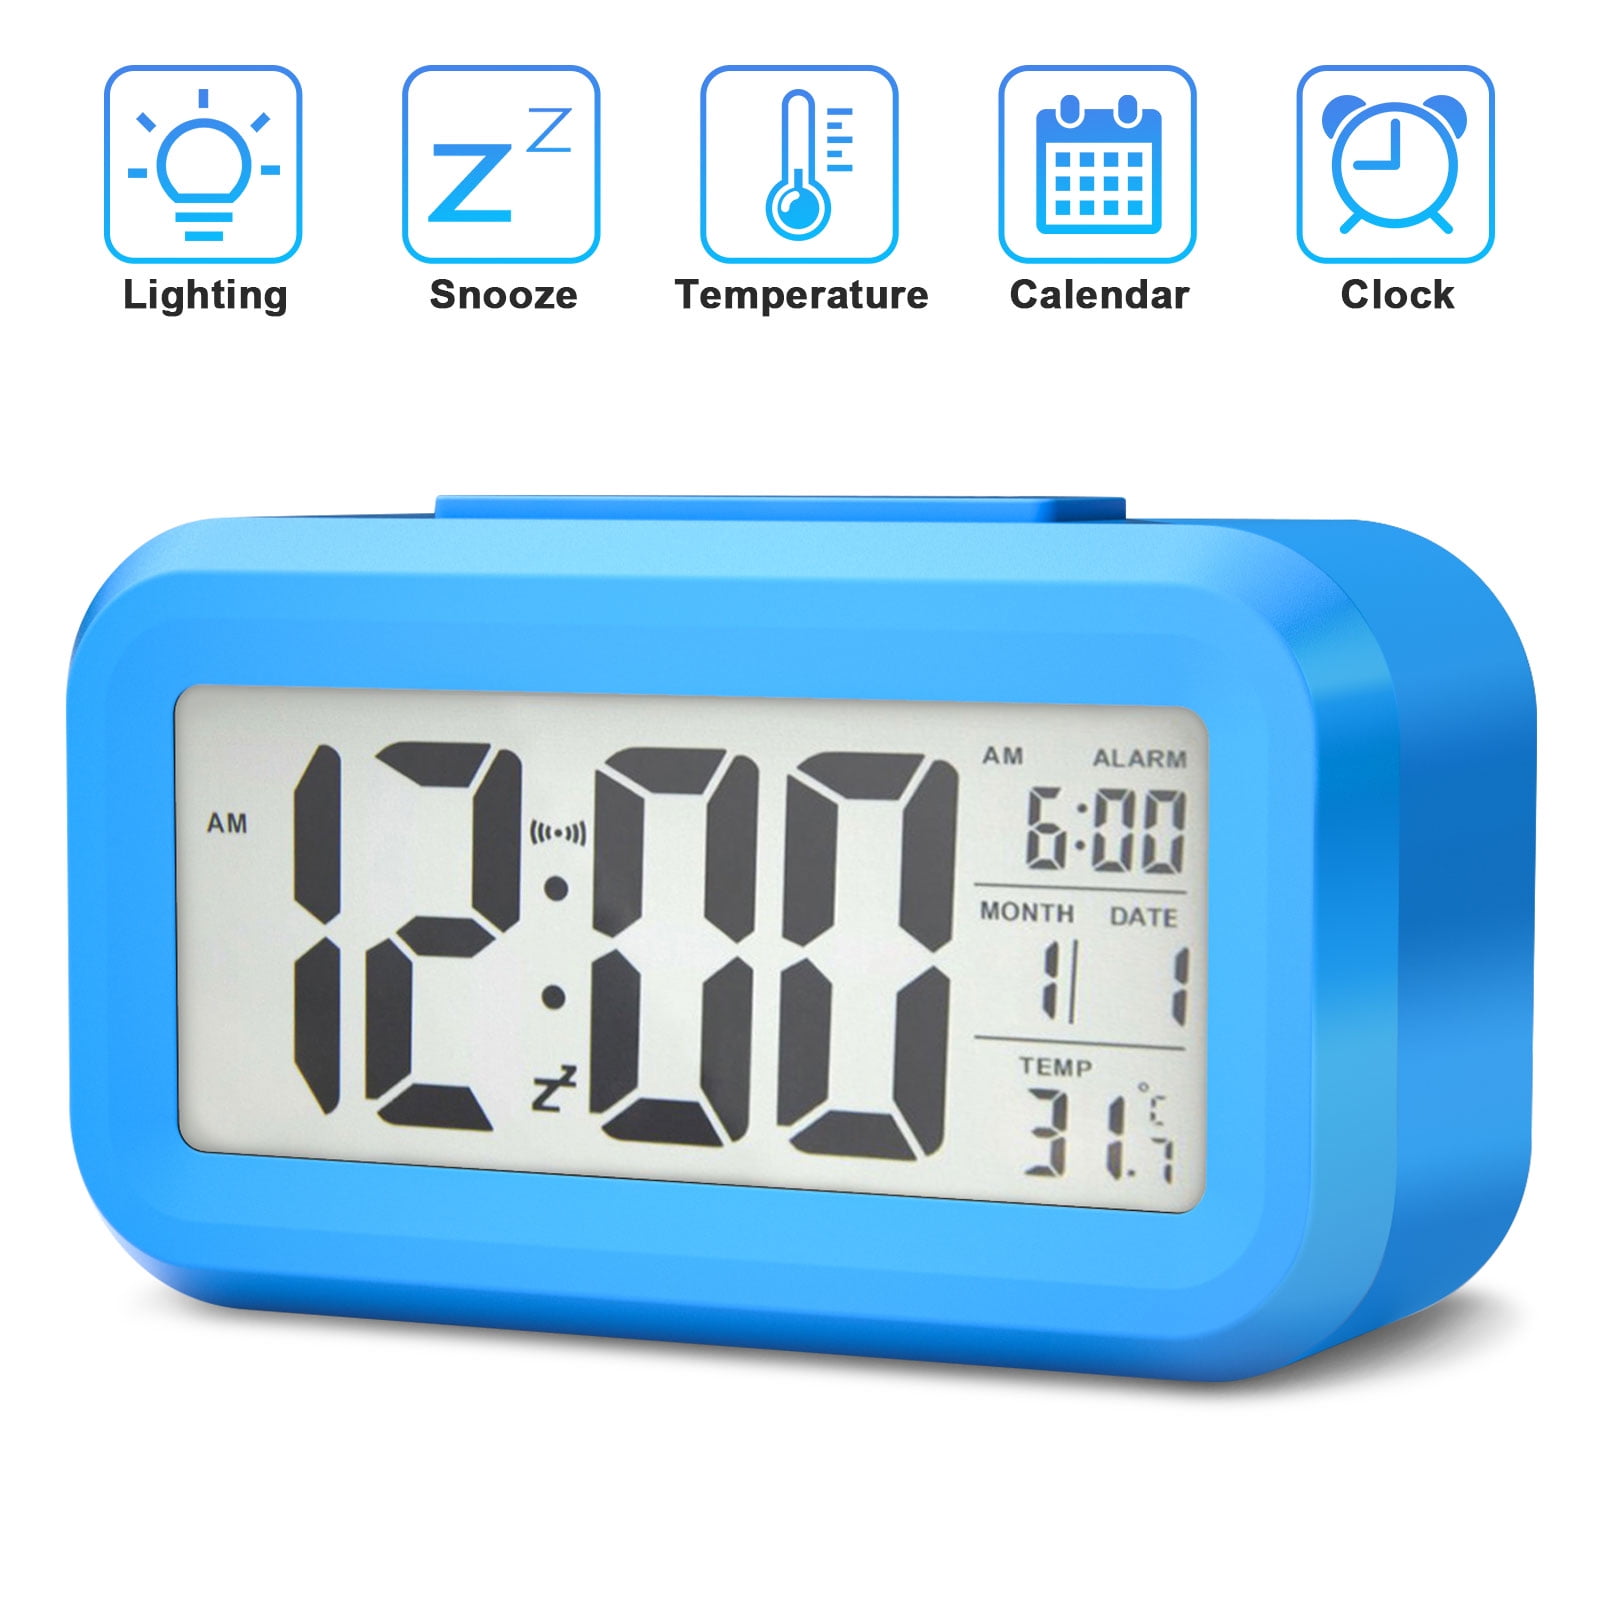 LED Electric Alarm Clock Mirror Surface Clock #2 Digital Clock HD Full Display 